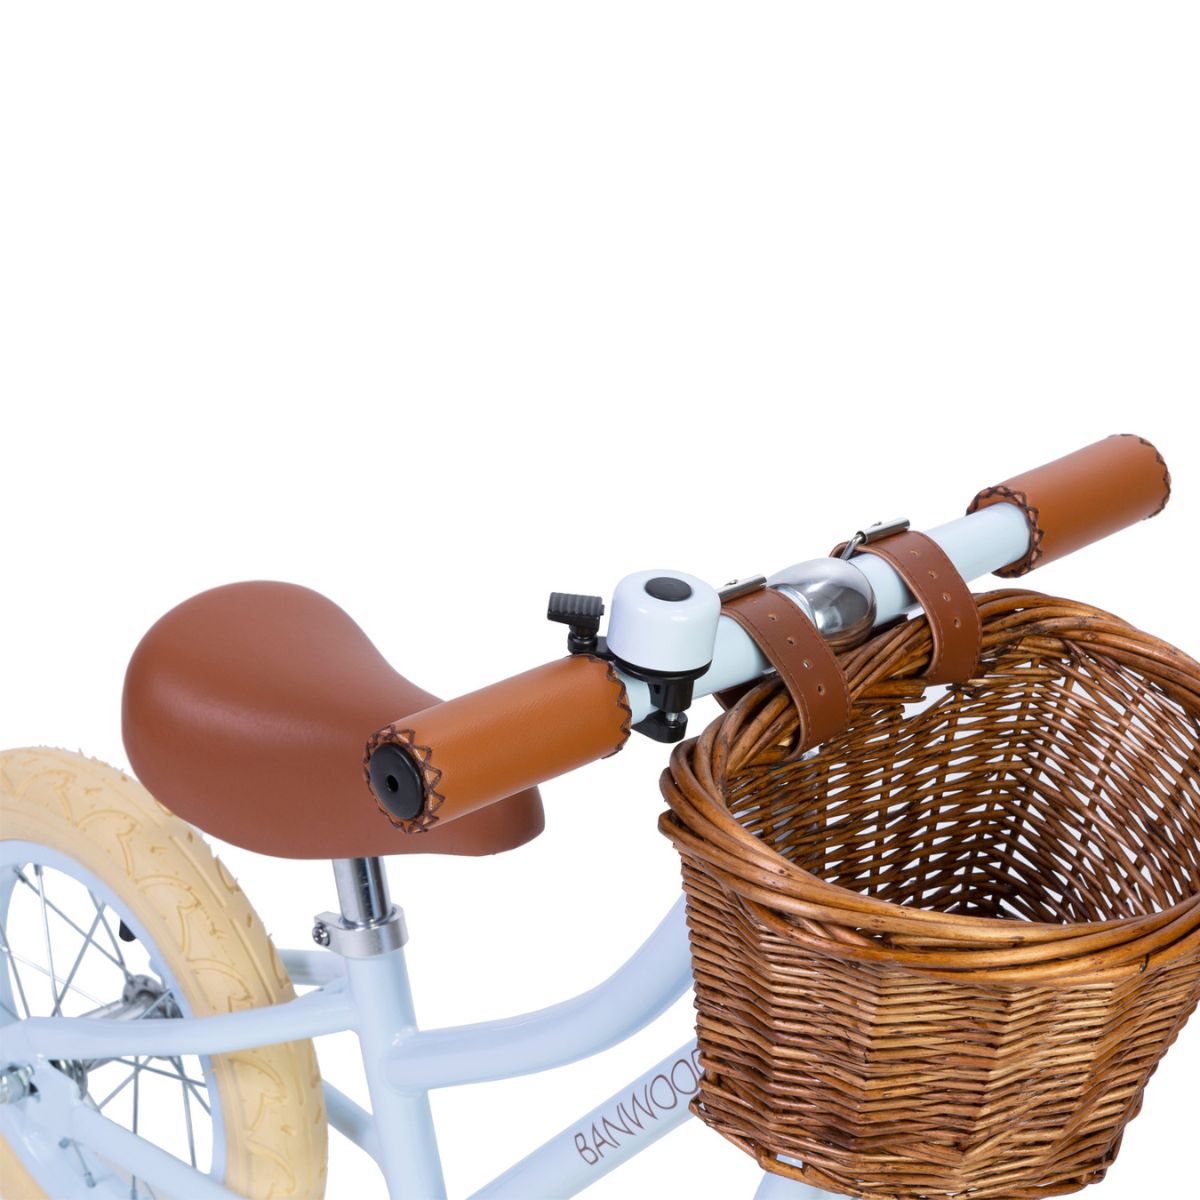 Banwood balance bike vintage cream